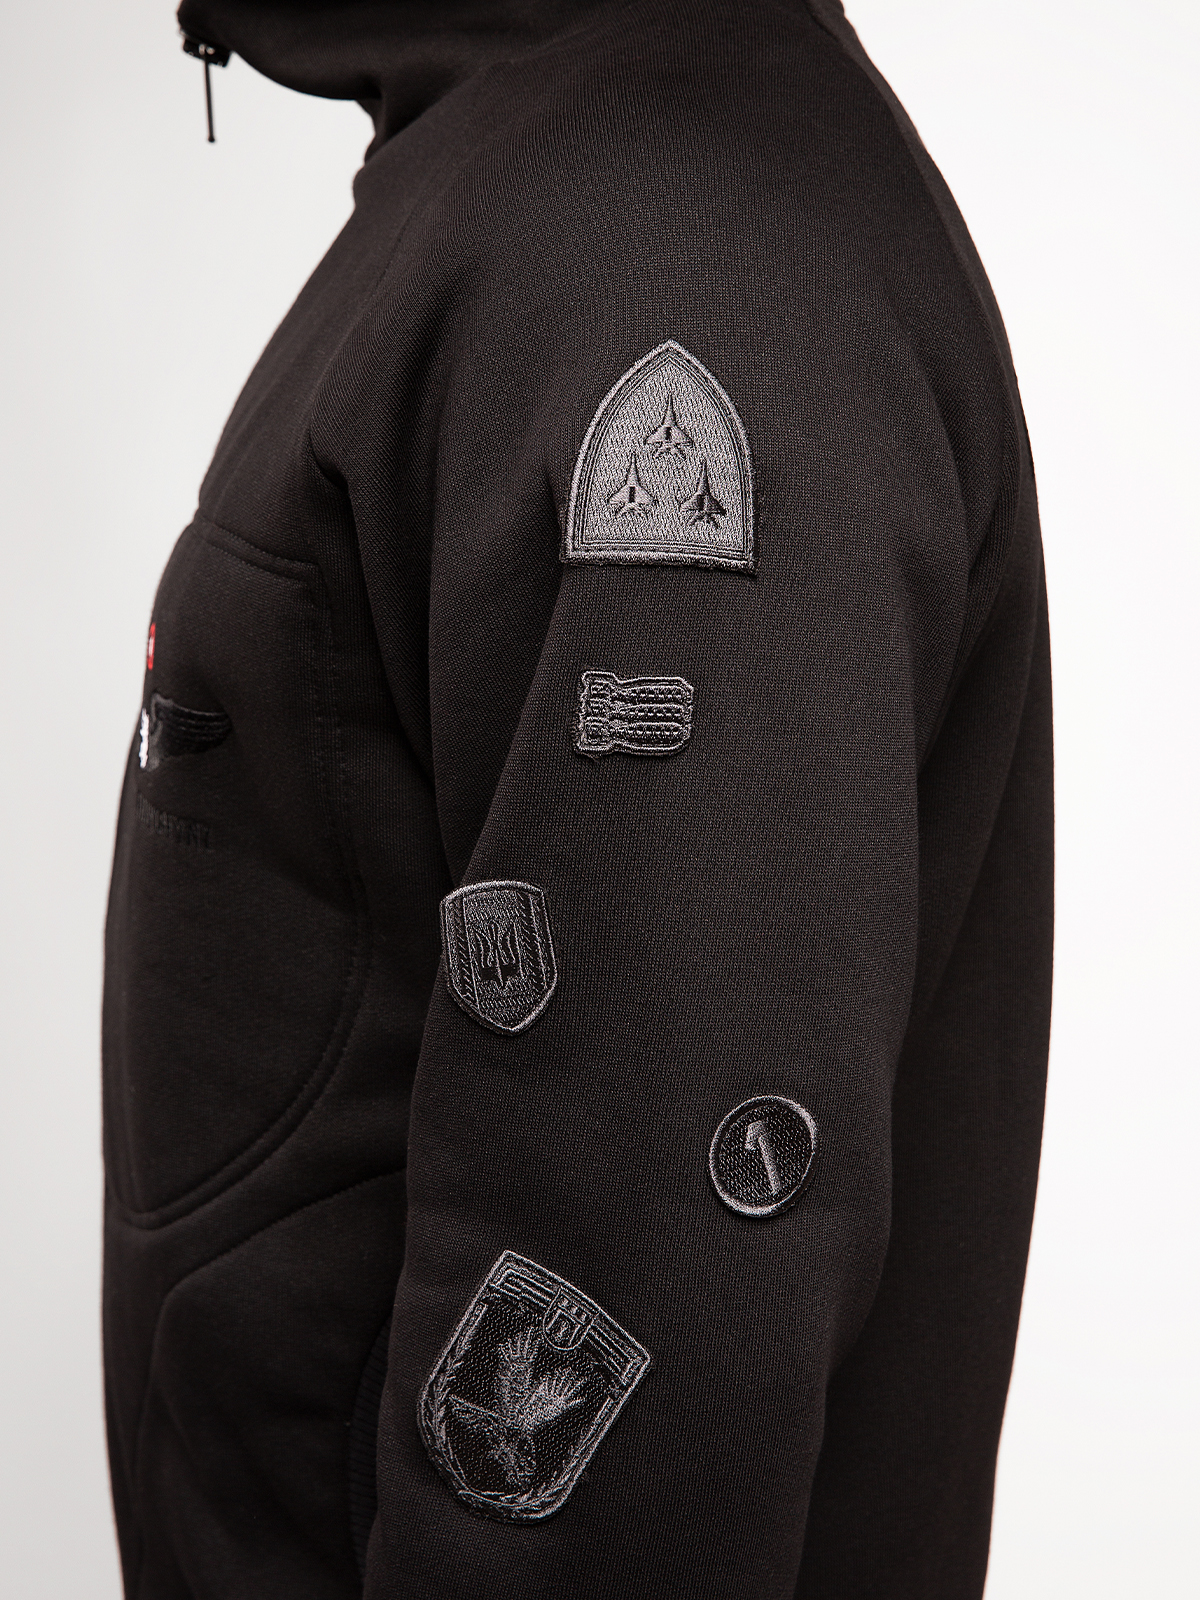 Women's Zippered Cardigan 114 Brigade. Color black. 5.